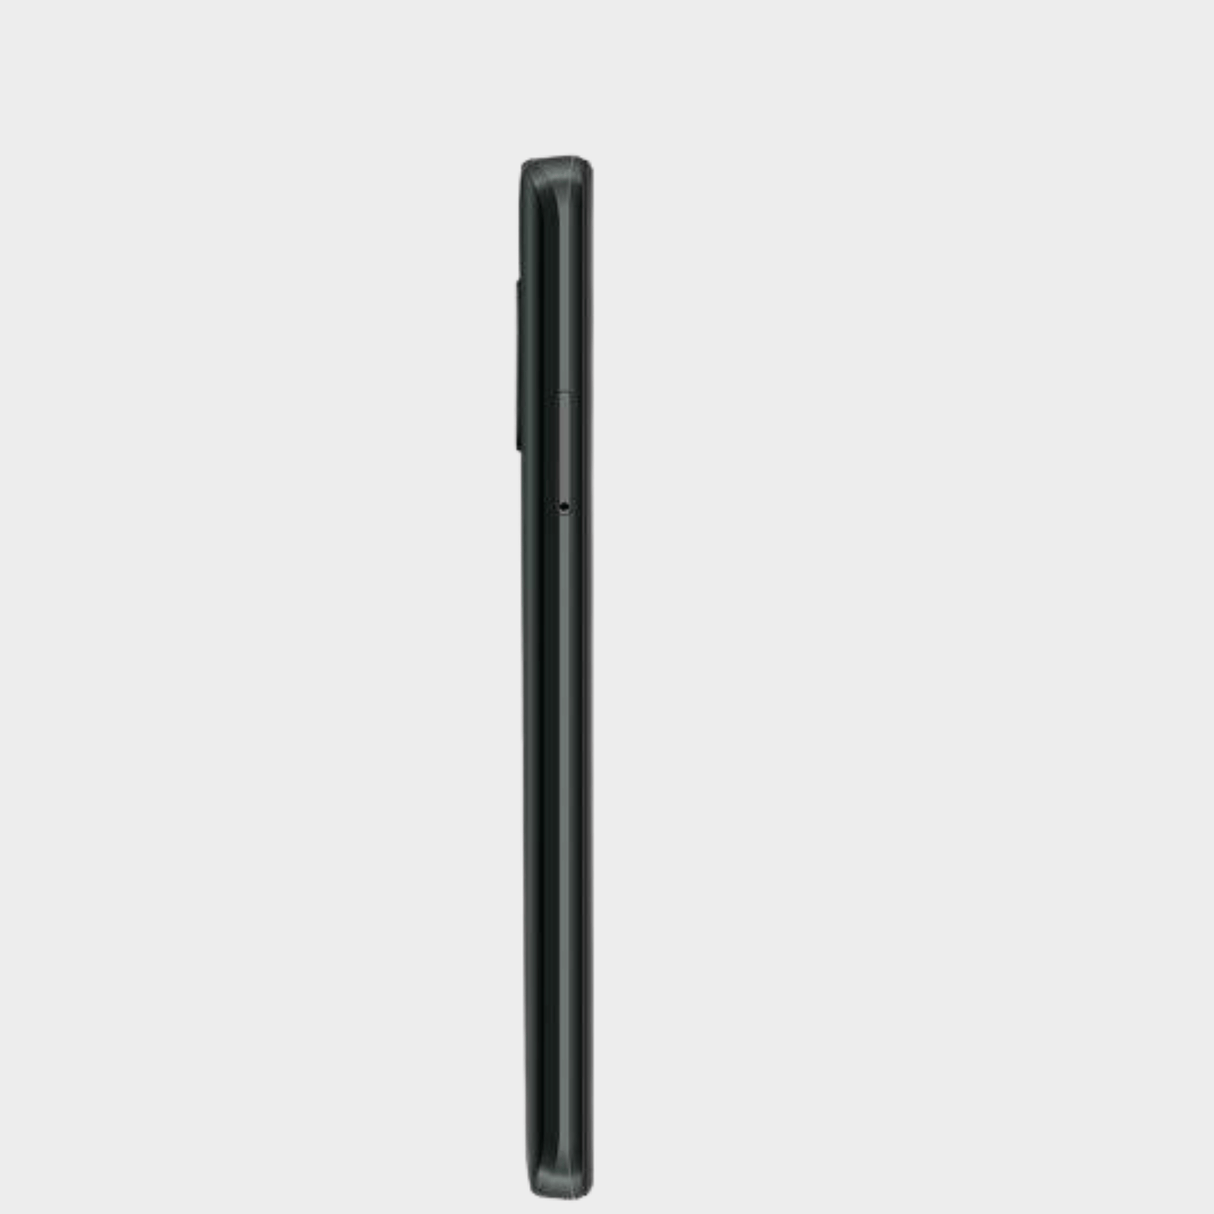 Hisense Infinity 6,53” Smart Phone, Infinity Display, Pop-up camera, 1 Free Screen Replacement, 4G LTE, 4020mAh battery-H50 Zoom